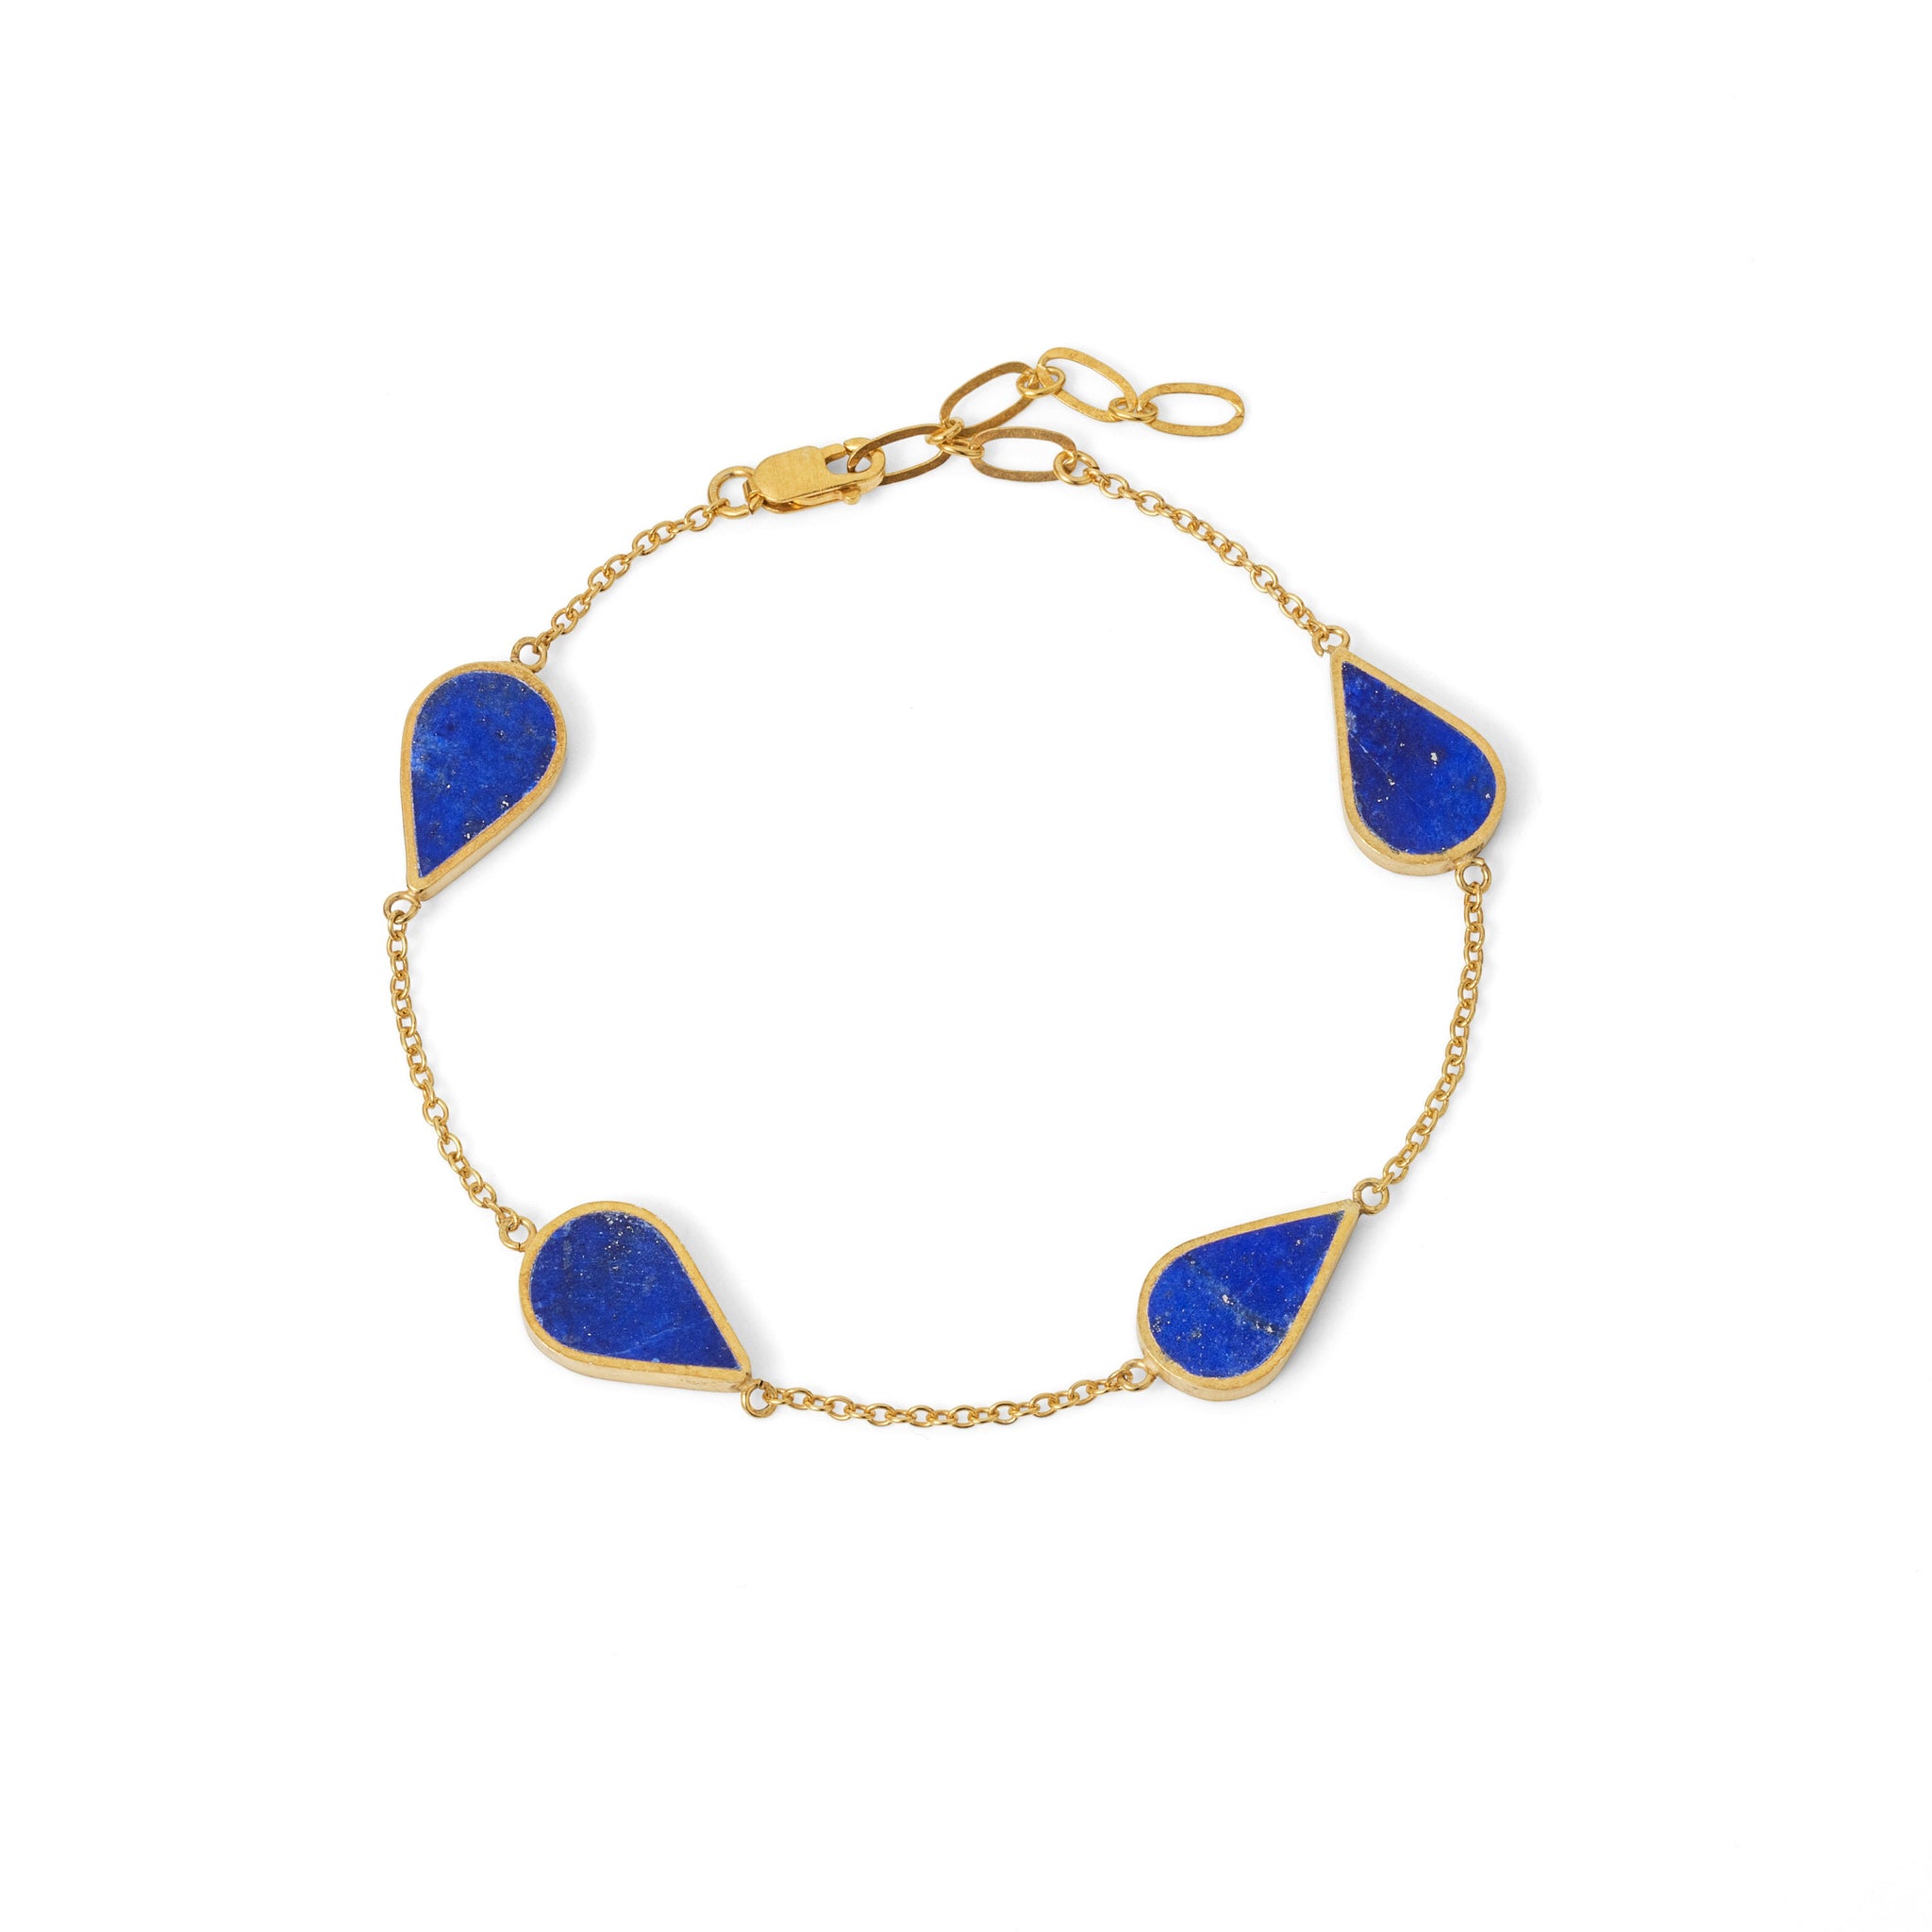 Handmade Afghan Blue Gemstone Lapis Lazuli Drop Gold Chain Bracelet Elegant Inspired Jewelry Boho Chic Ear Accessories Gift for Her